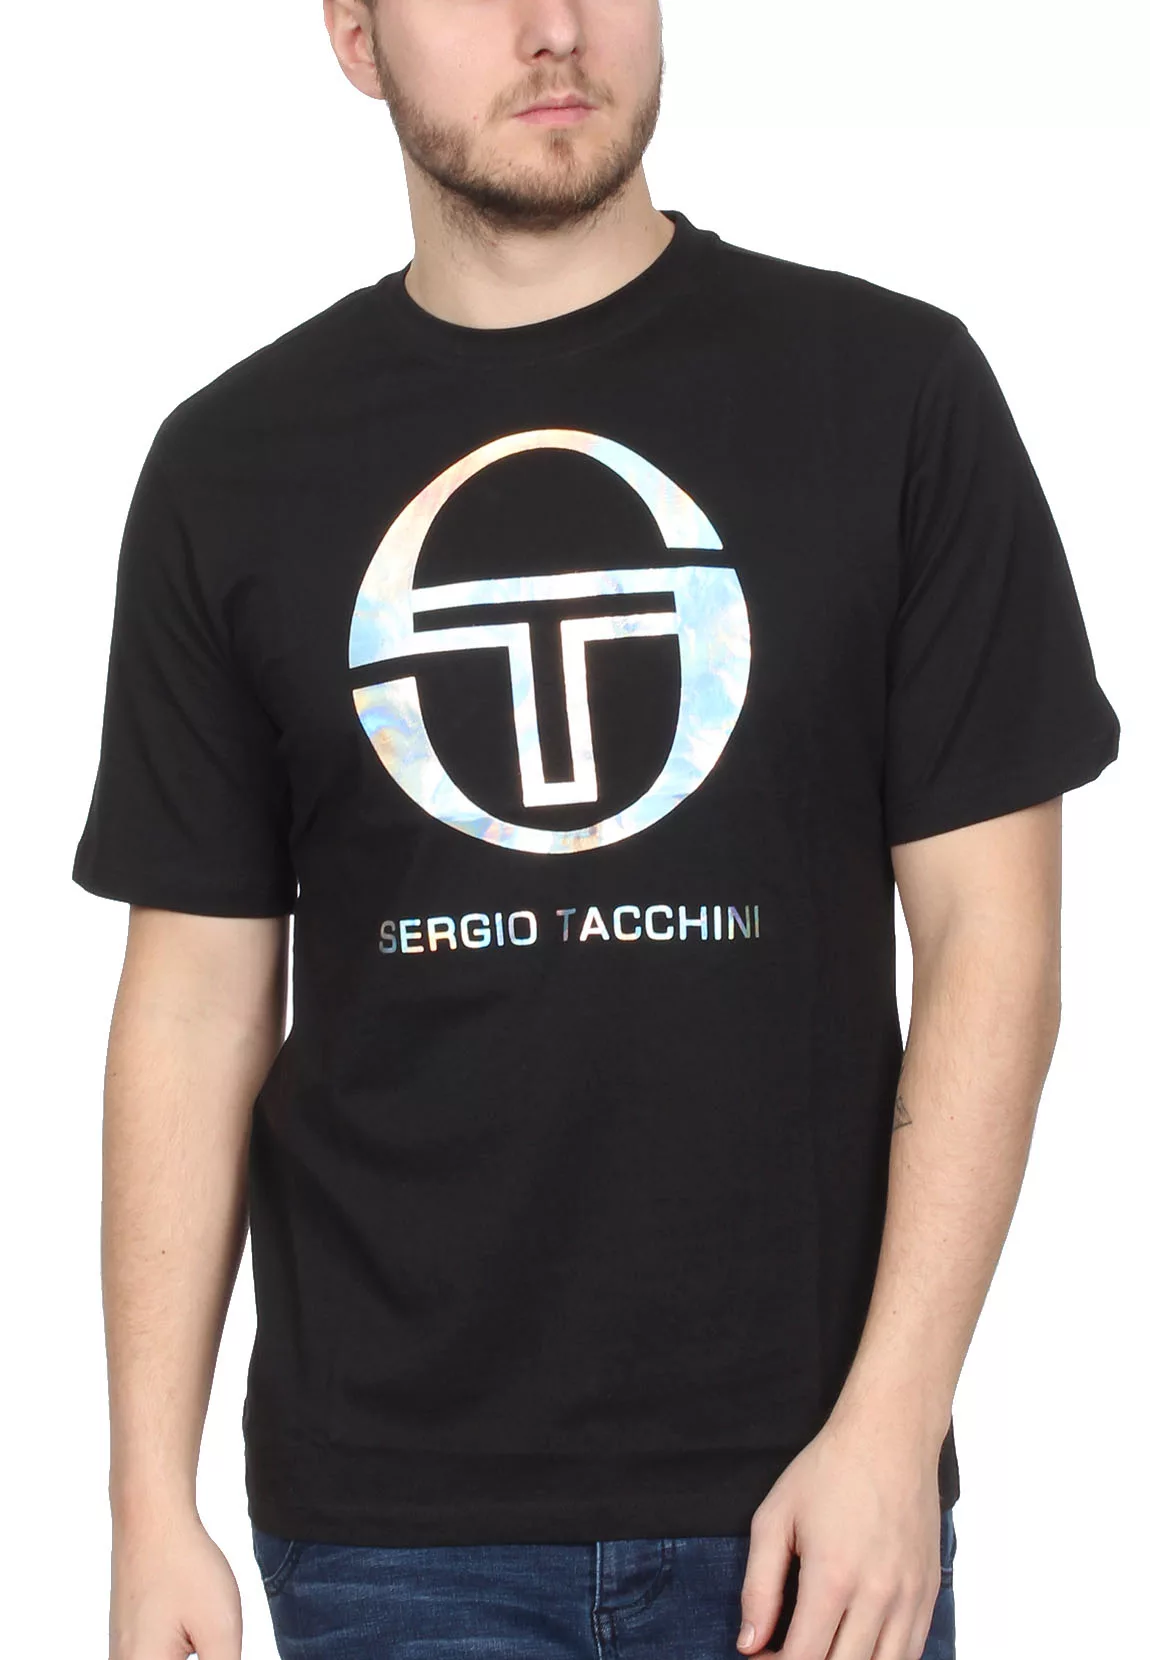 Sergio Tacchini T-Shirt Herren IBERIS 037740 Black Hologram günstig online kaufen